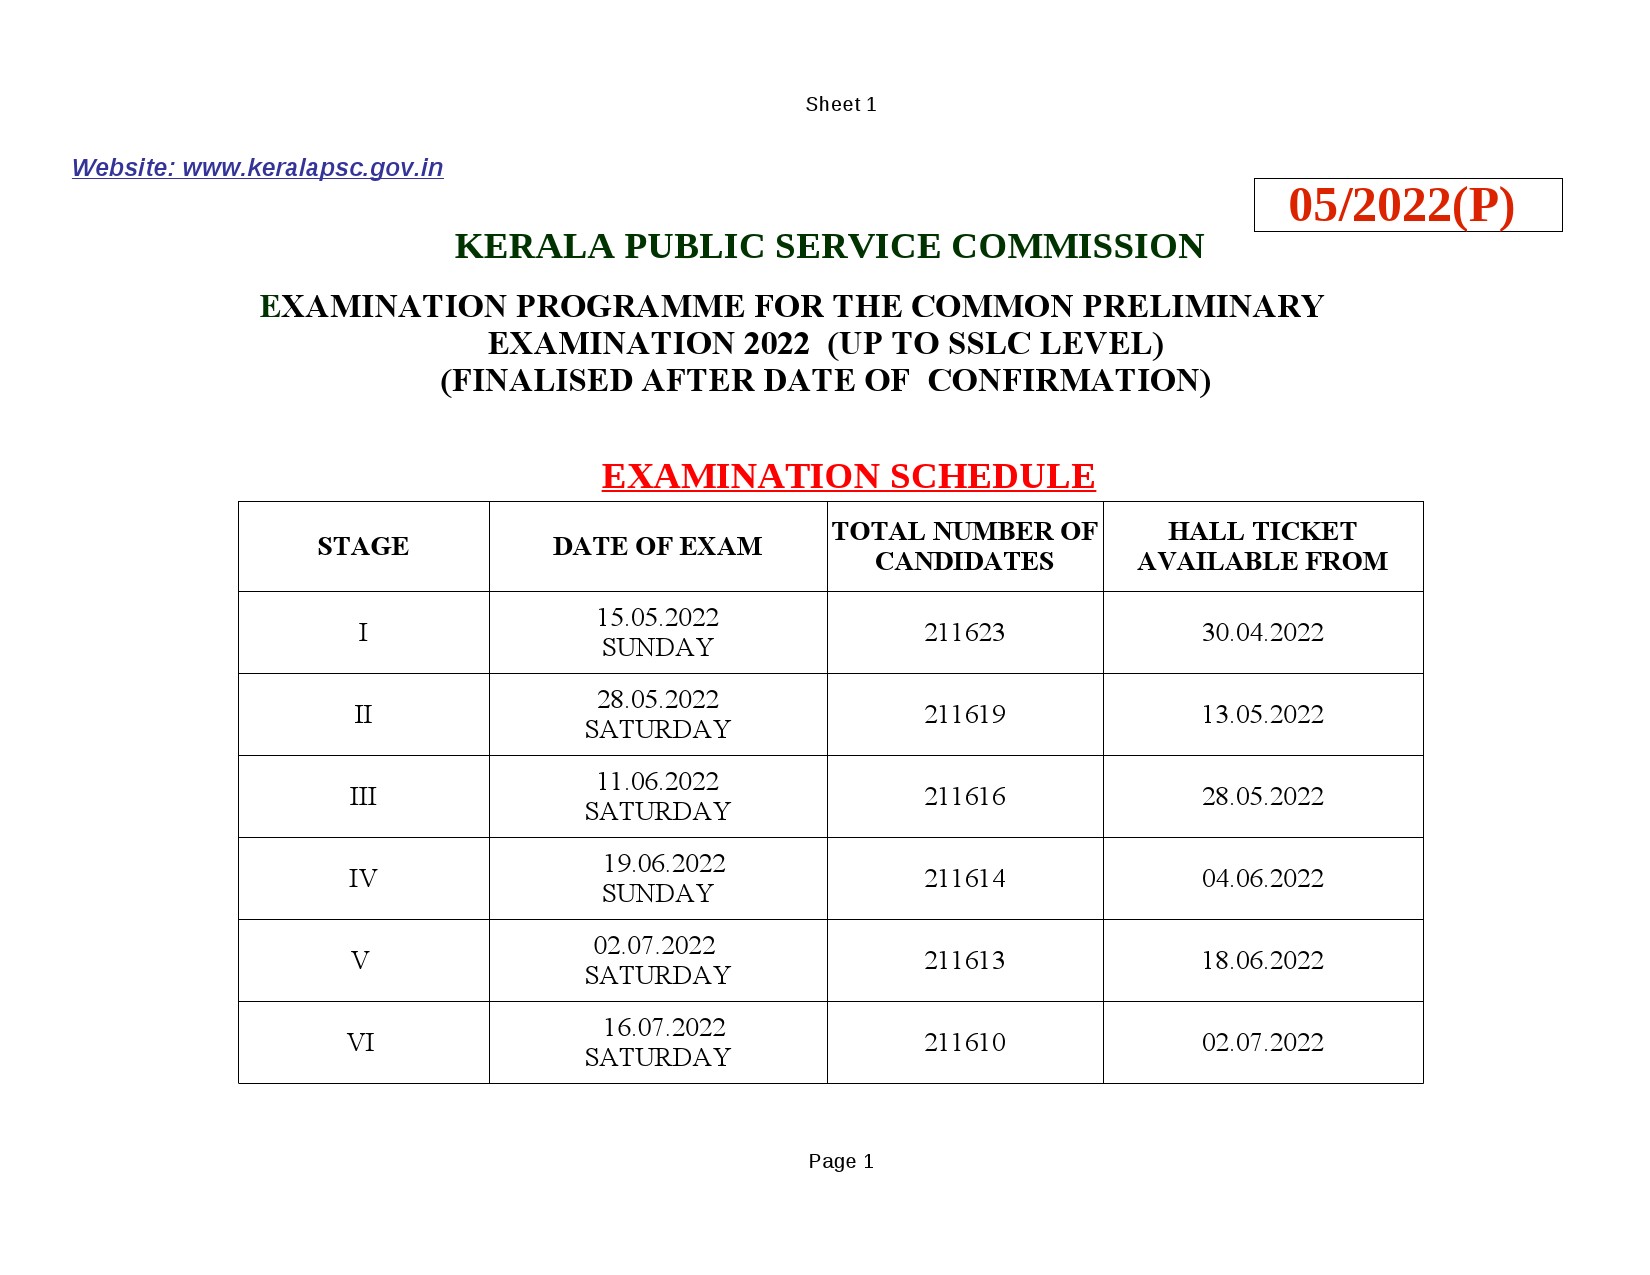 KPSC EXAM FOR COMMON PRELIMINARY EXAMINATION 2022 - Notification Image 1